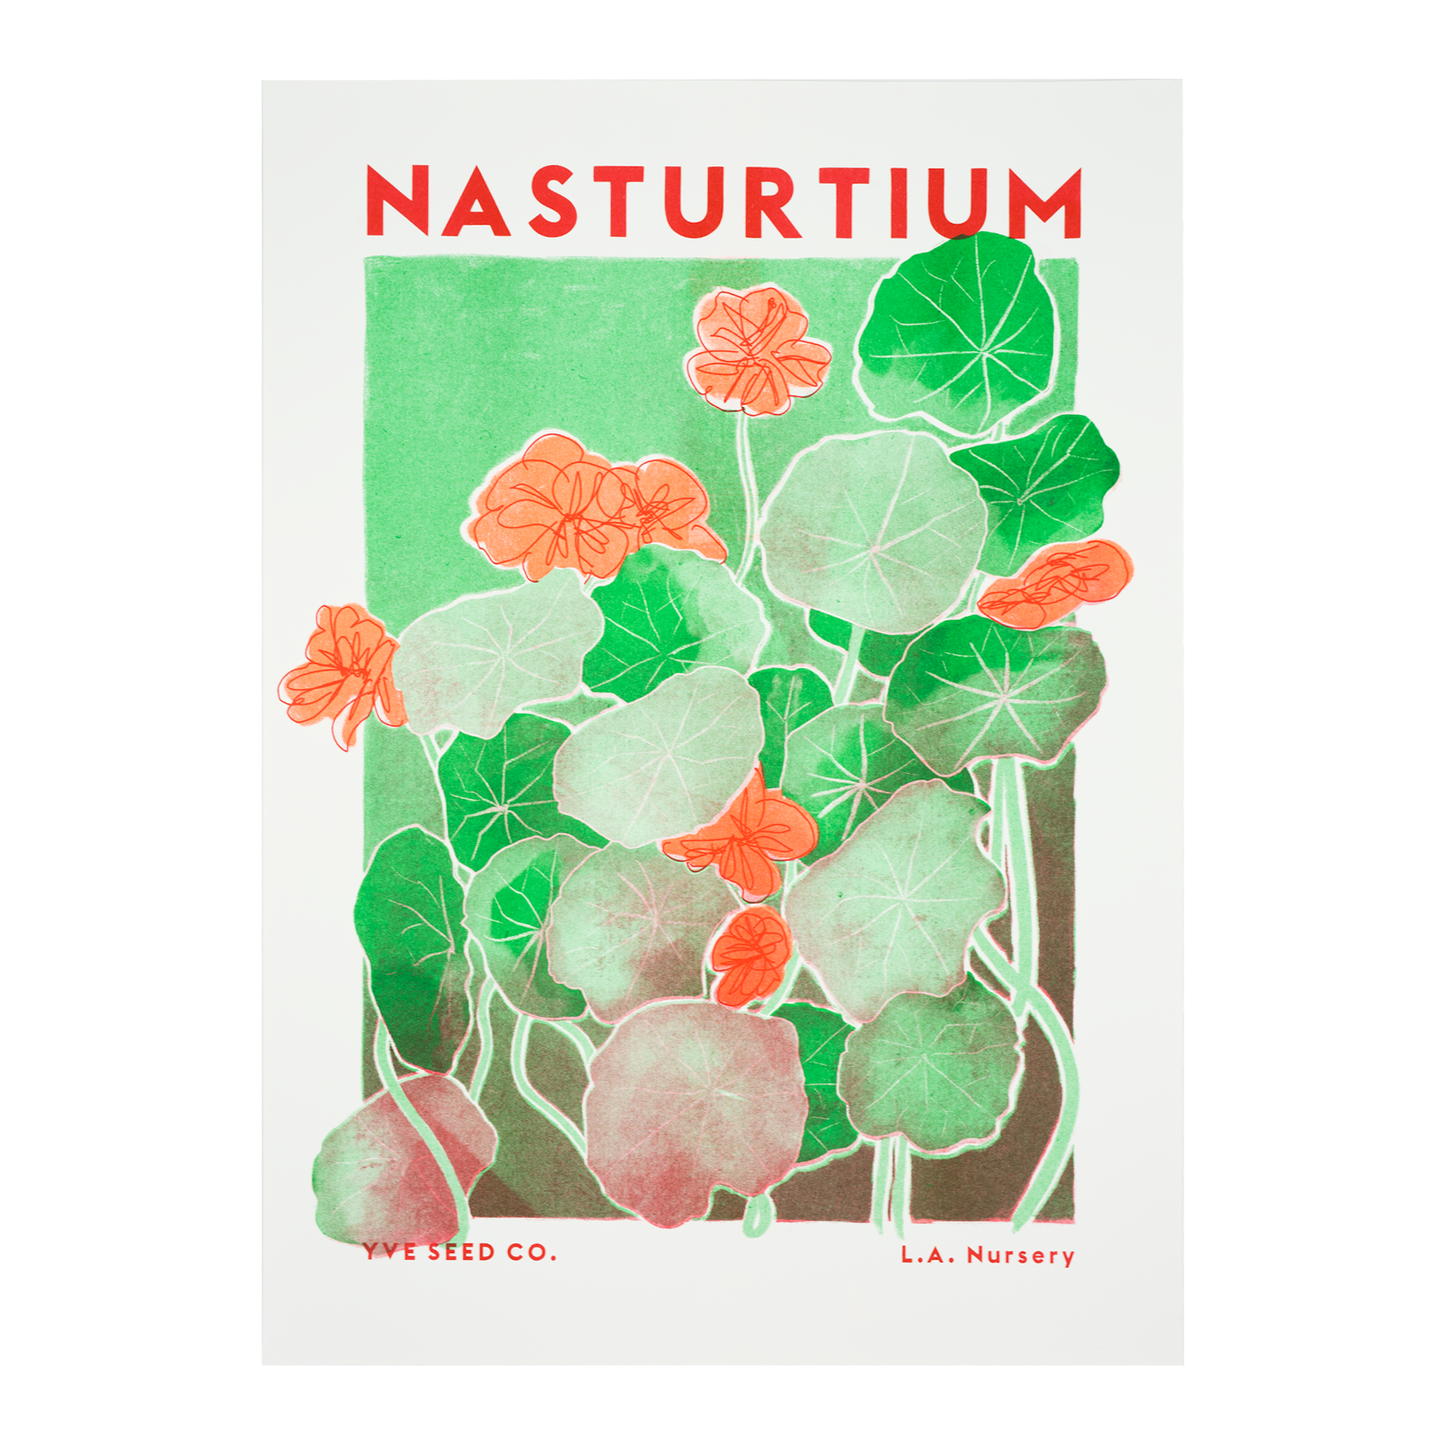 A risograph print featuring Nasturtium plants - white background